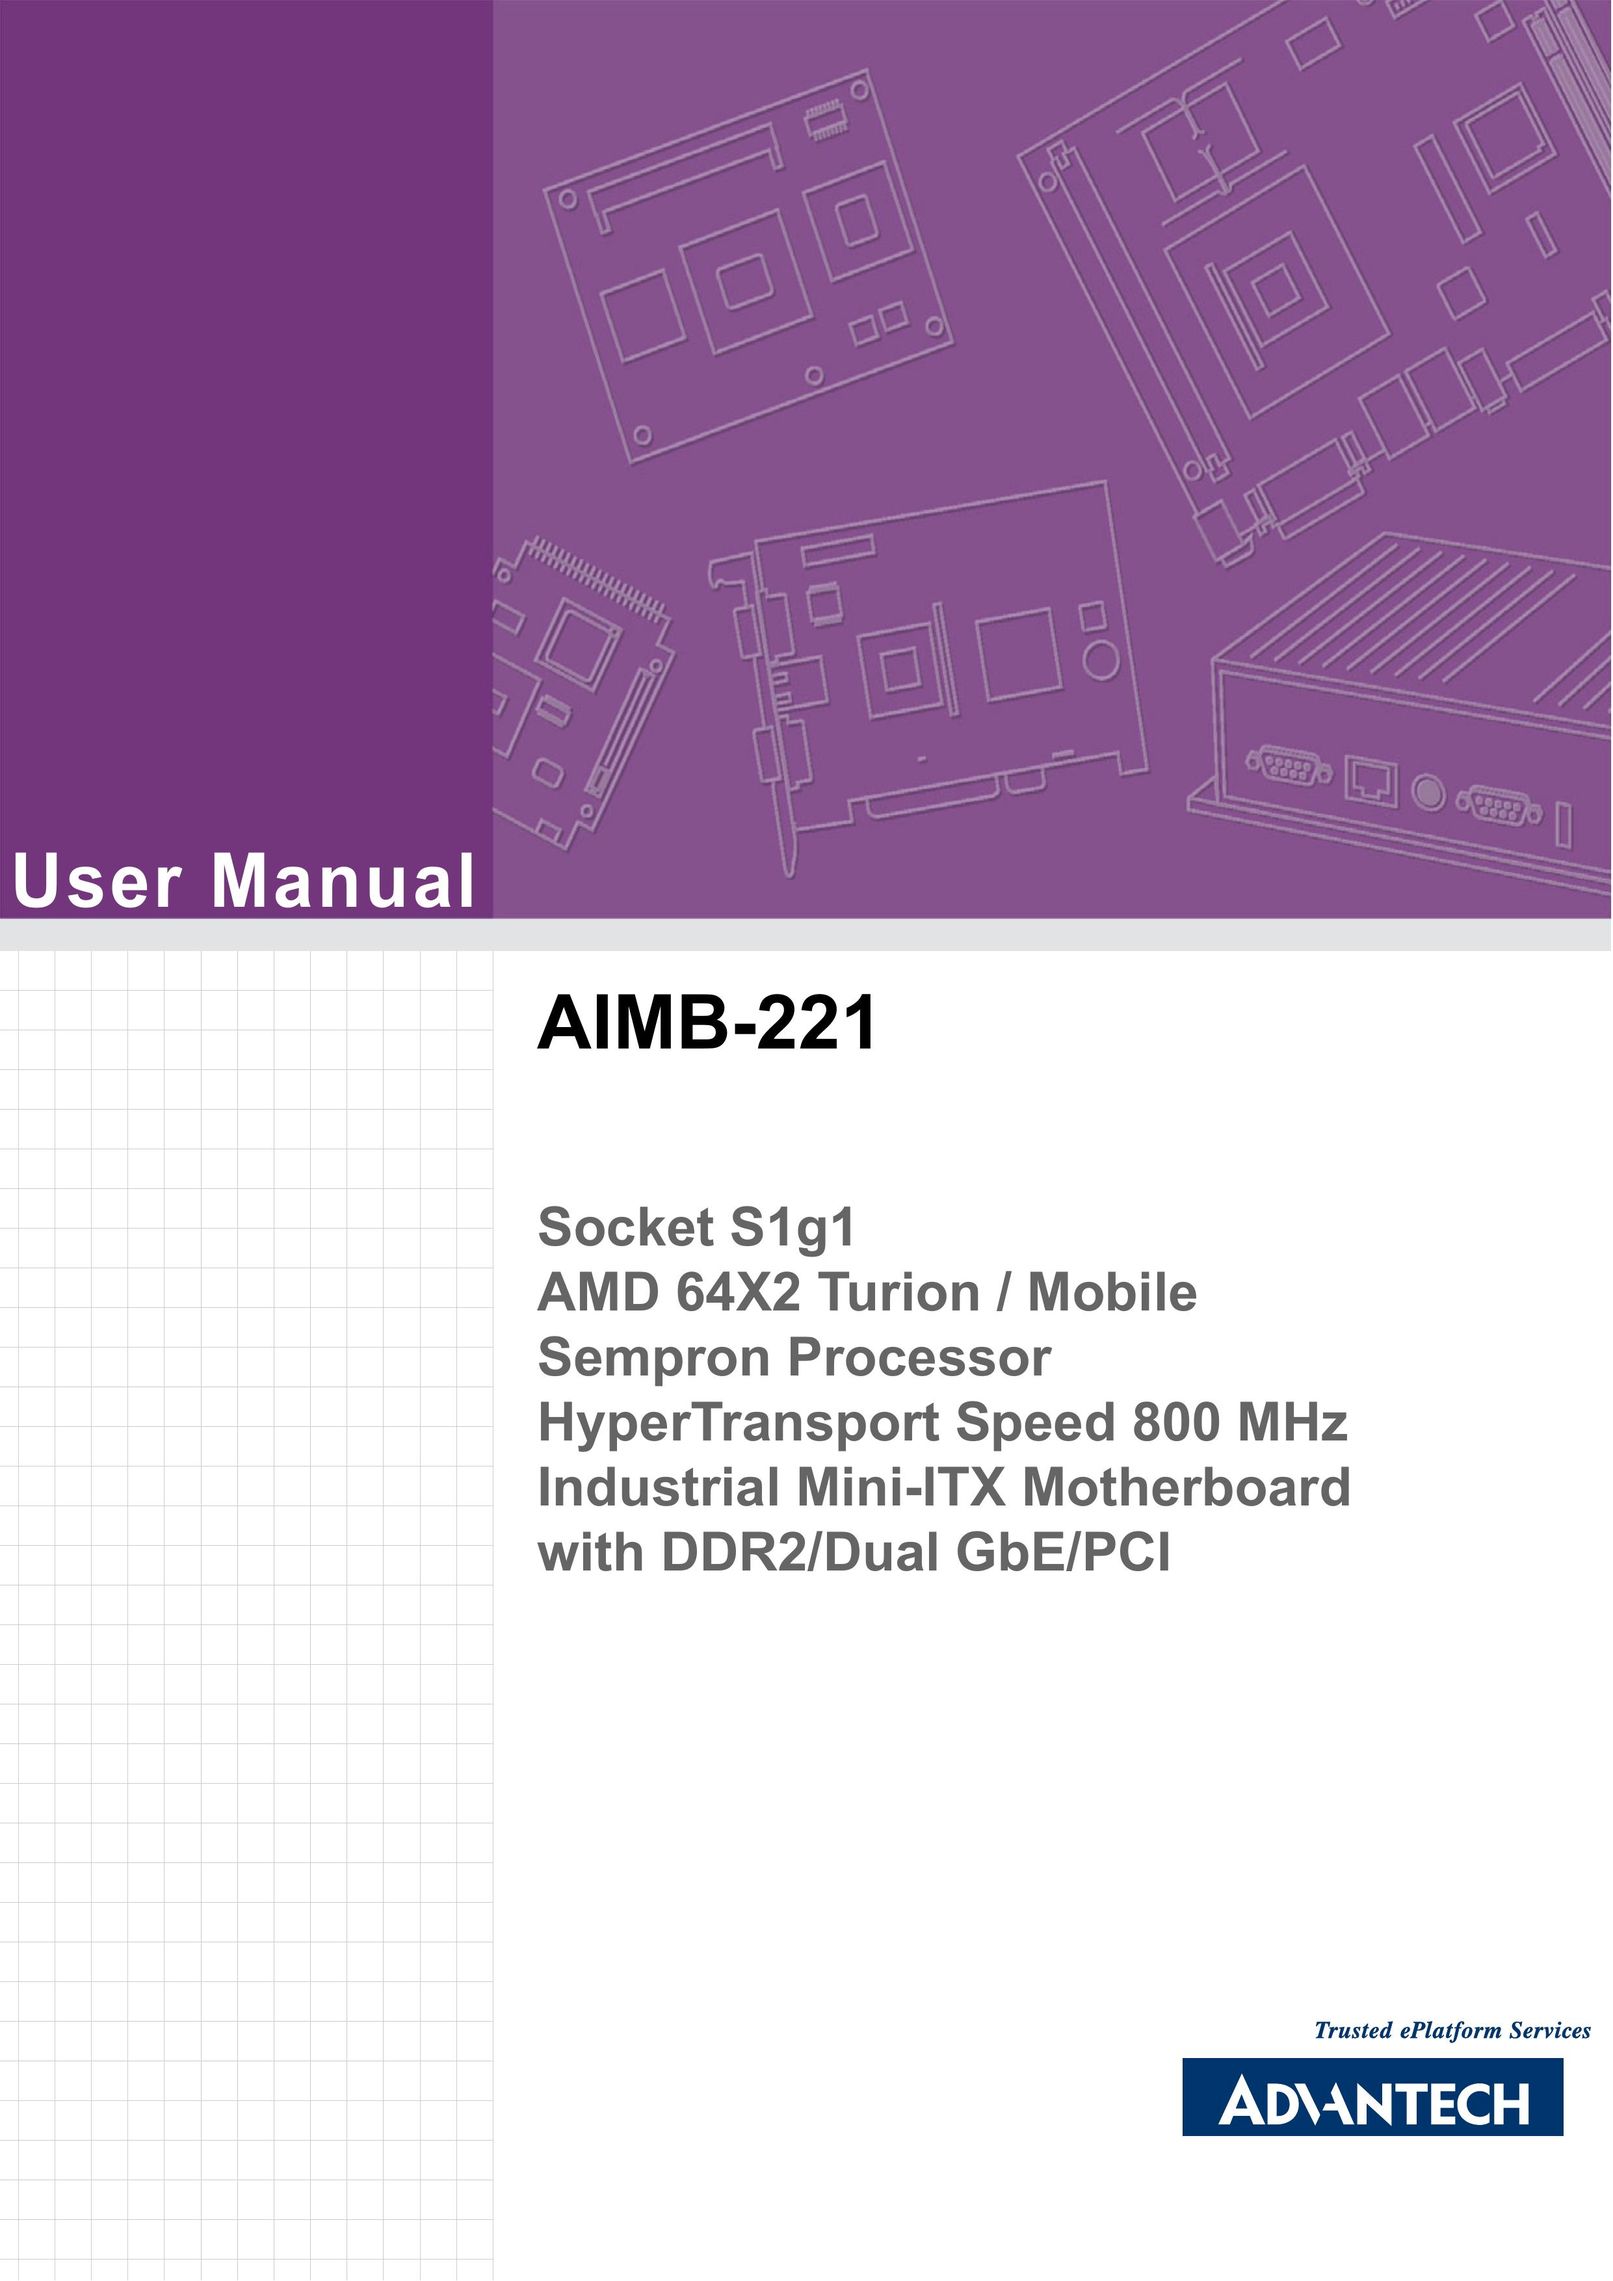 Advantech AIMB-221 Computer Hardware User Manual